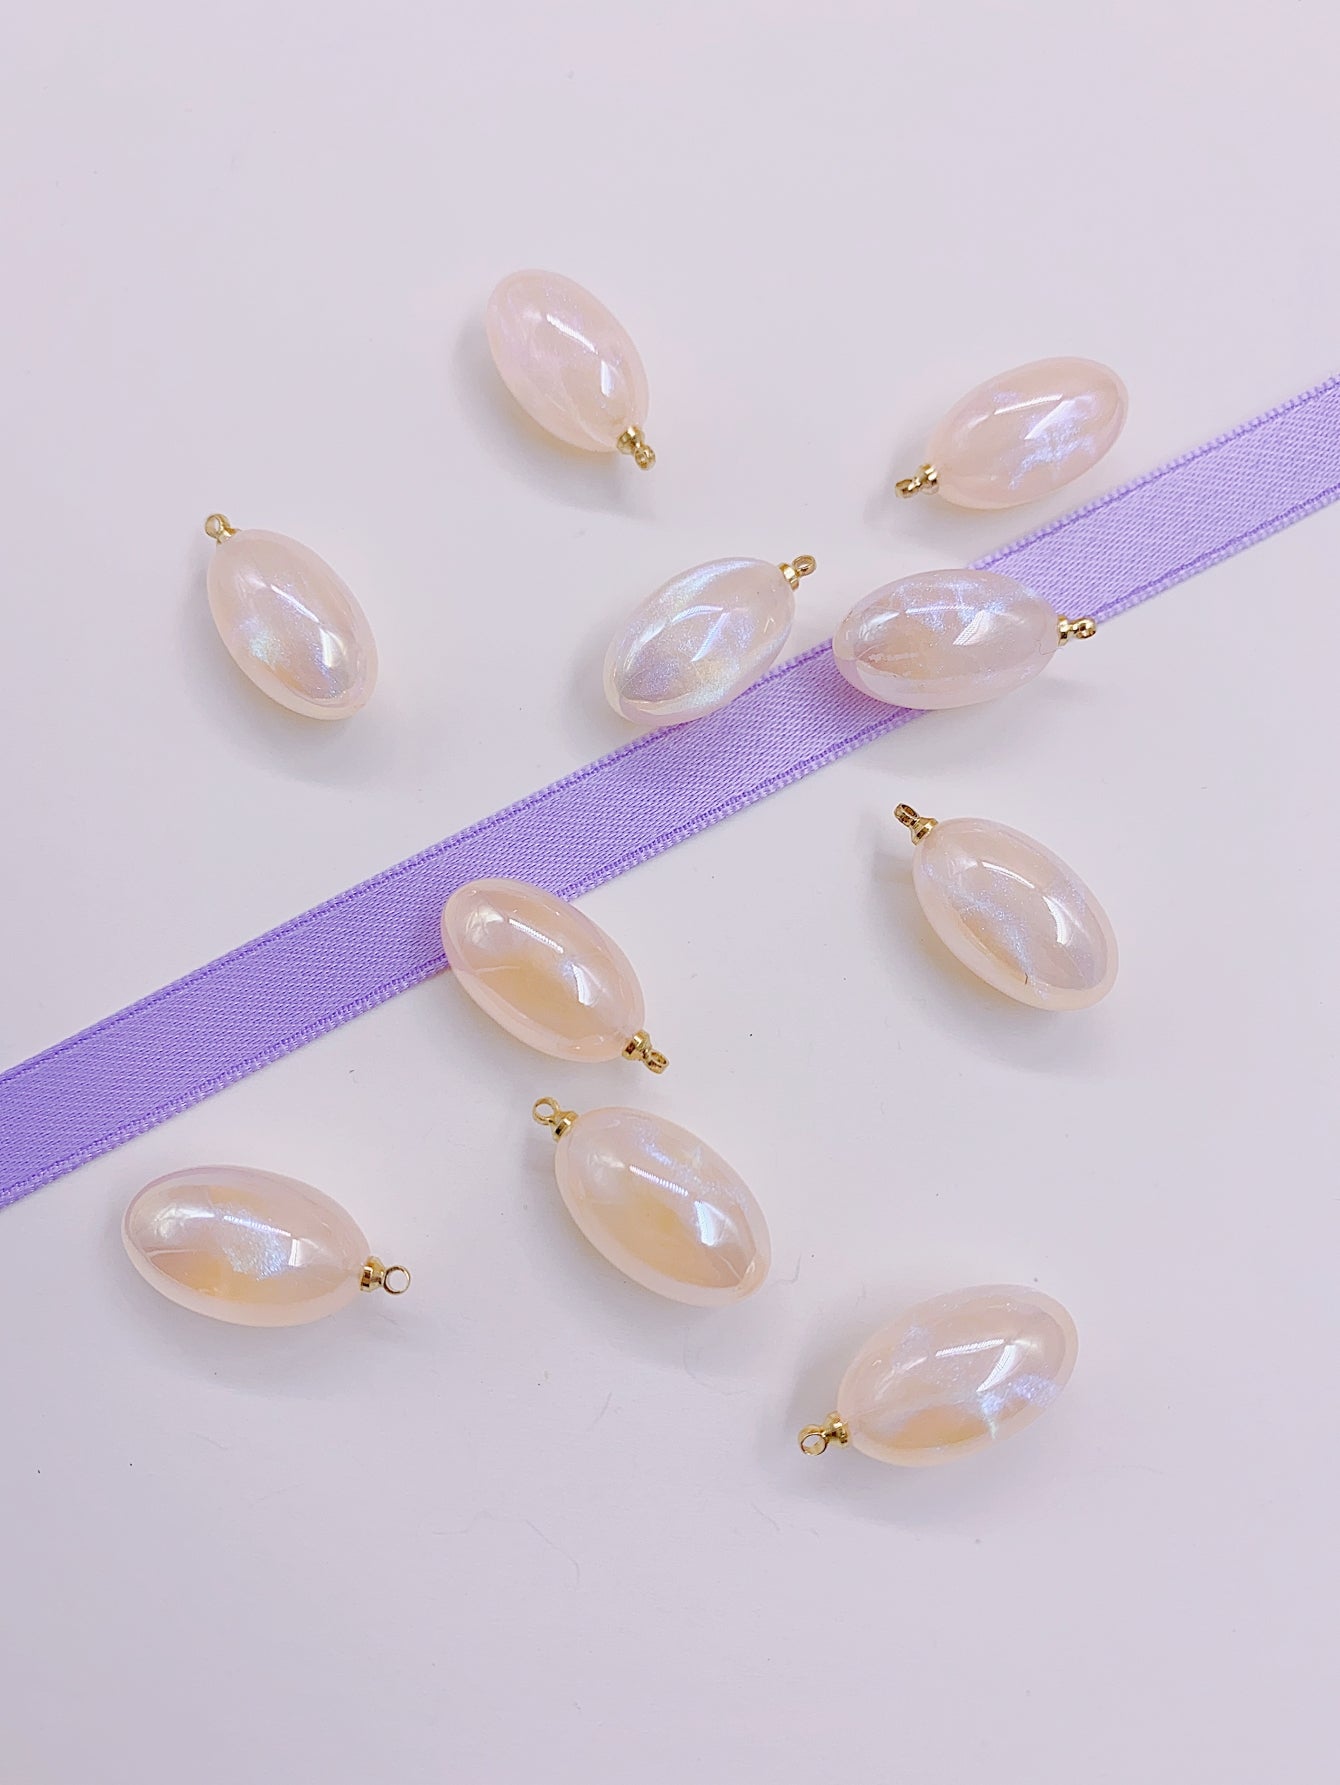 New mermaid star color series raisin oval hanging ornament diy accessories beaded materials